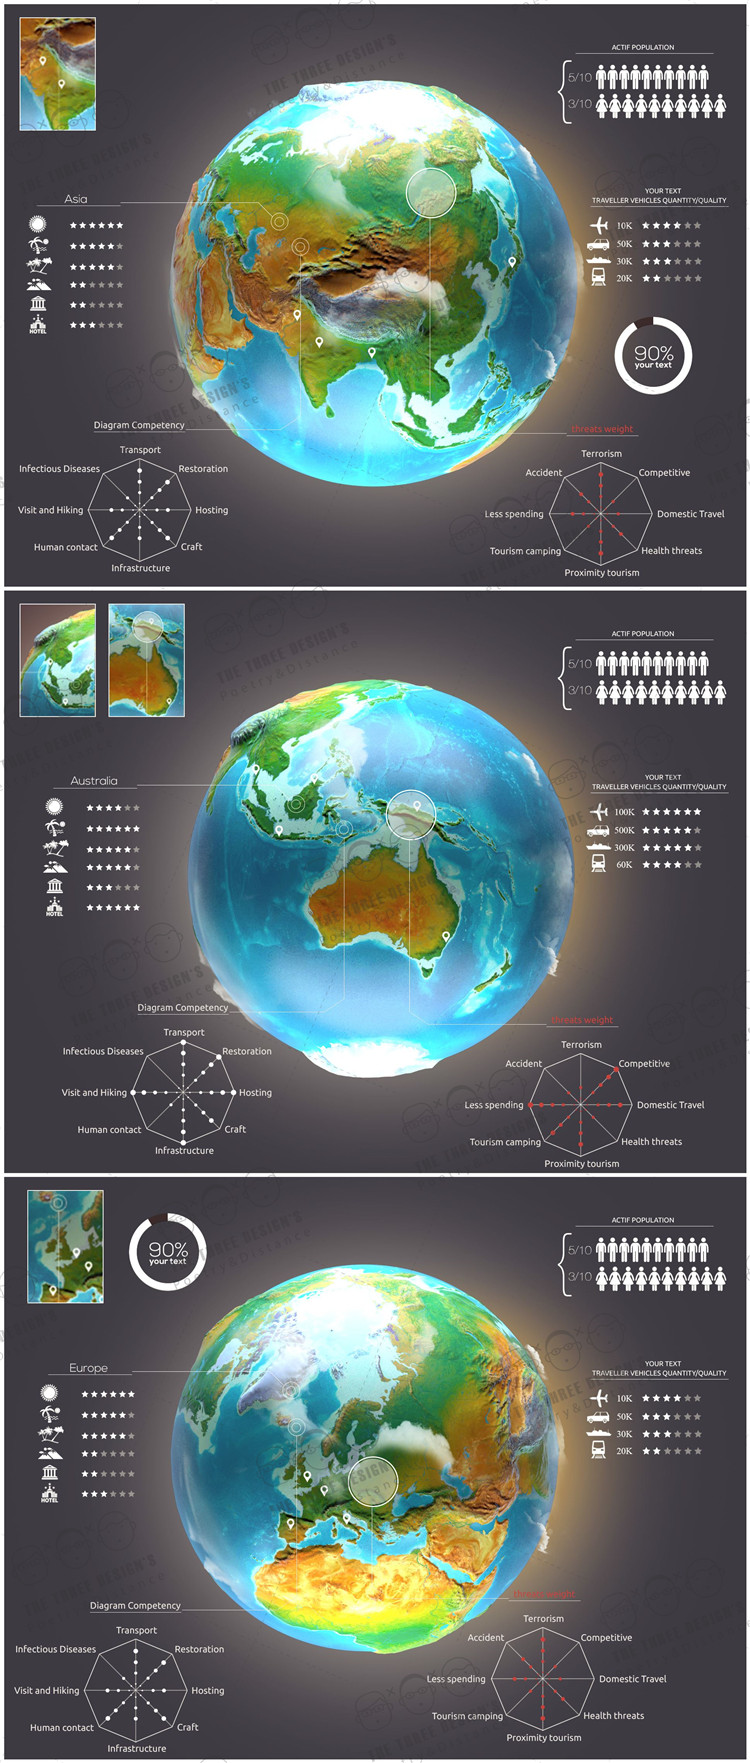 cy0011#地球 世界 太空圆形球体信息化 图表信息图 psd分层素材